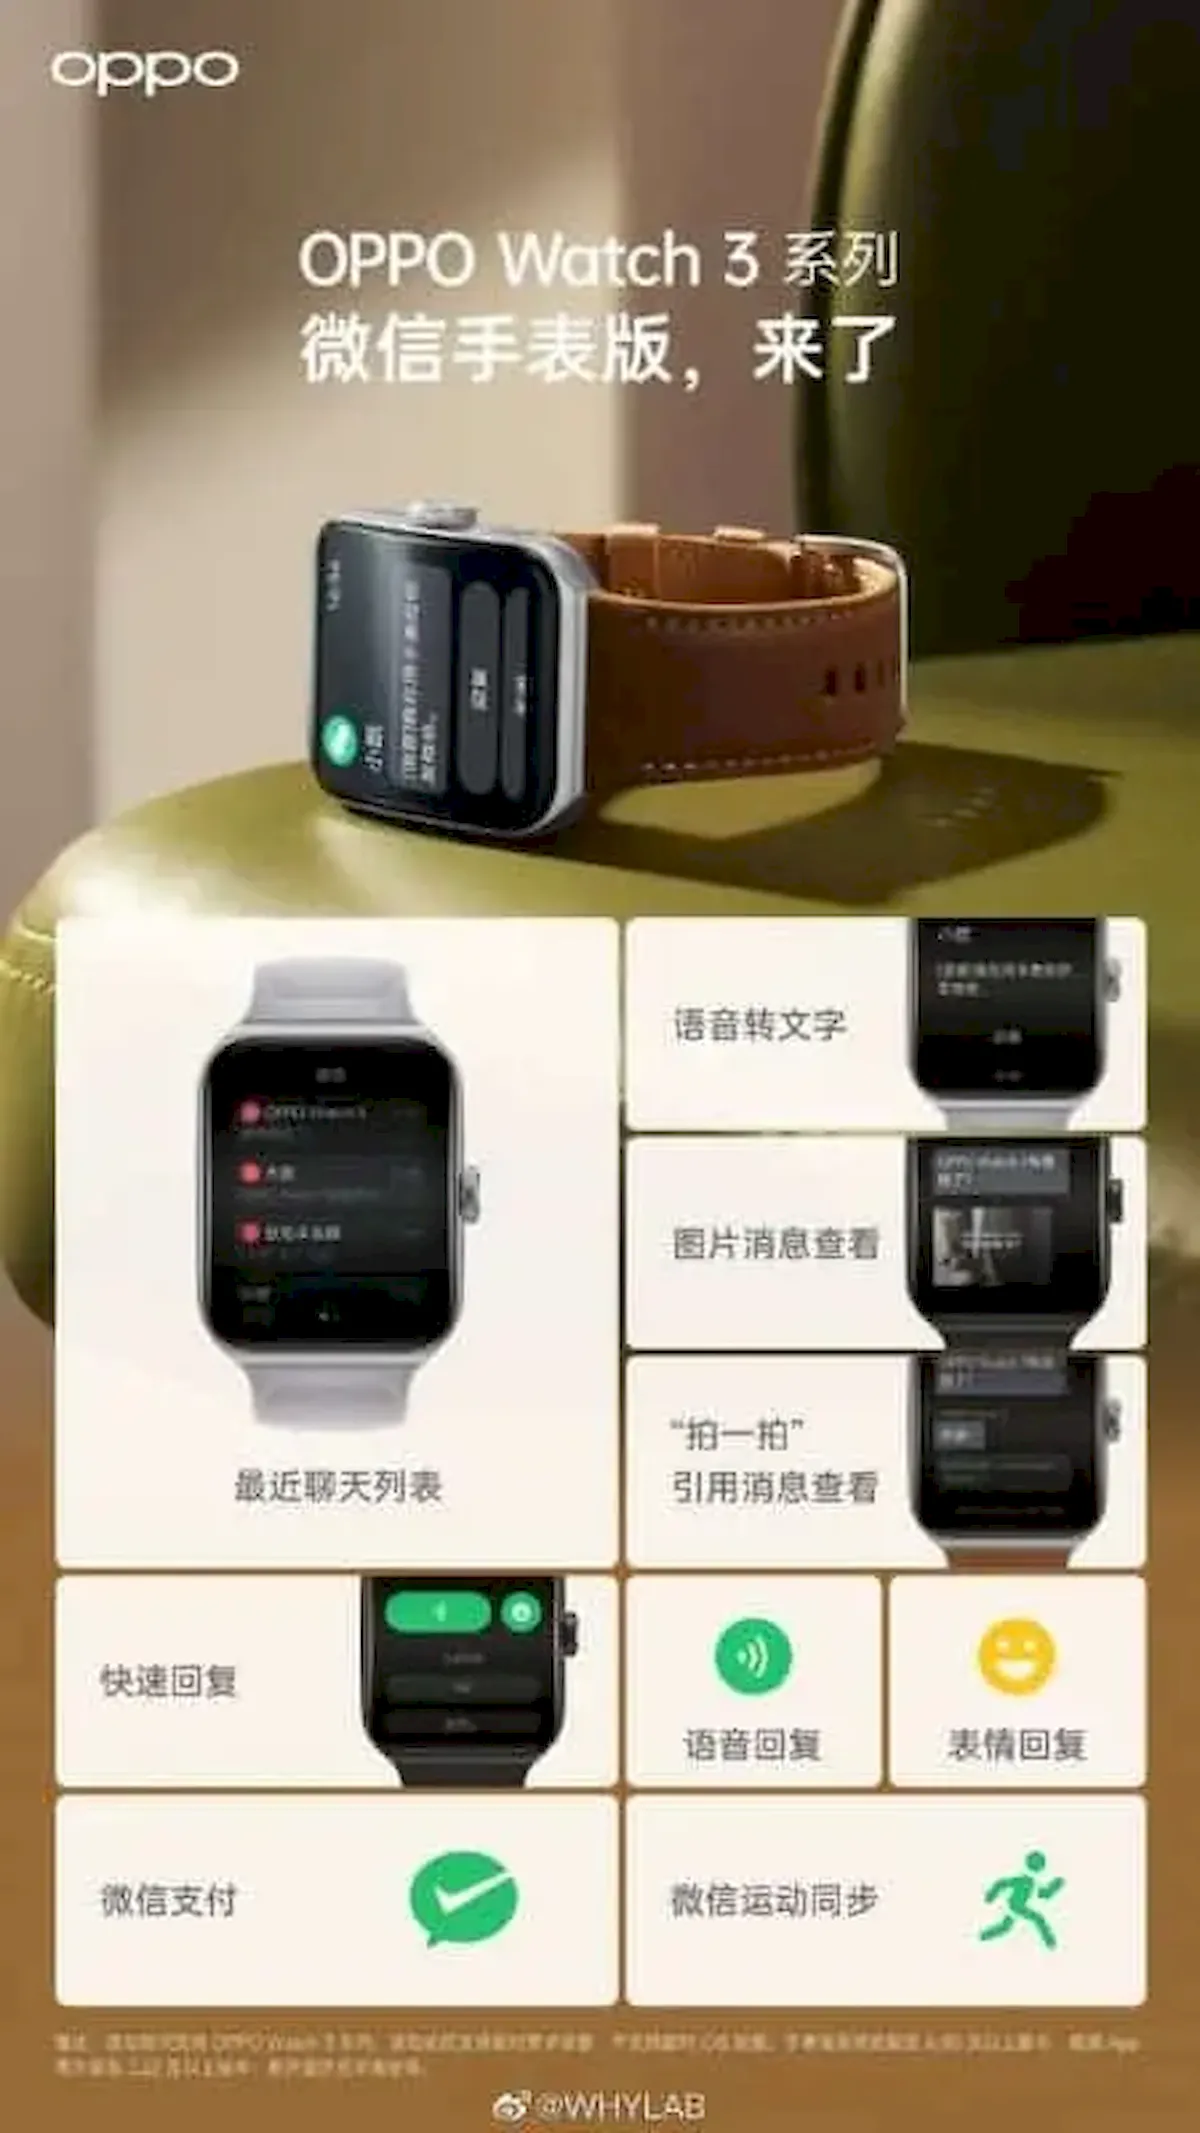 Oppo Watch 3 WeChat Edition foi lançado na China